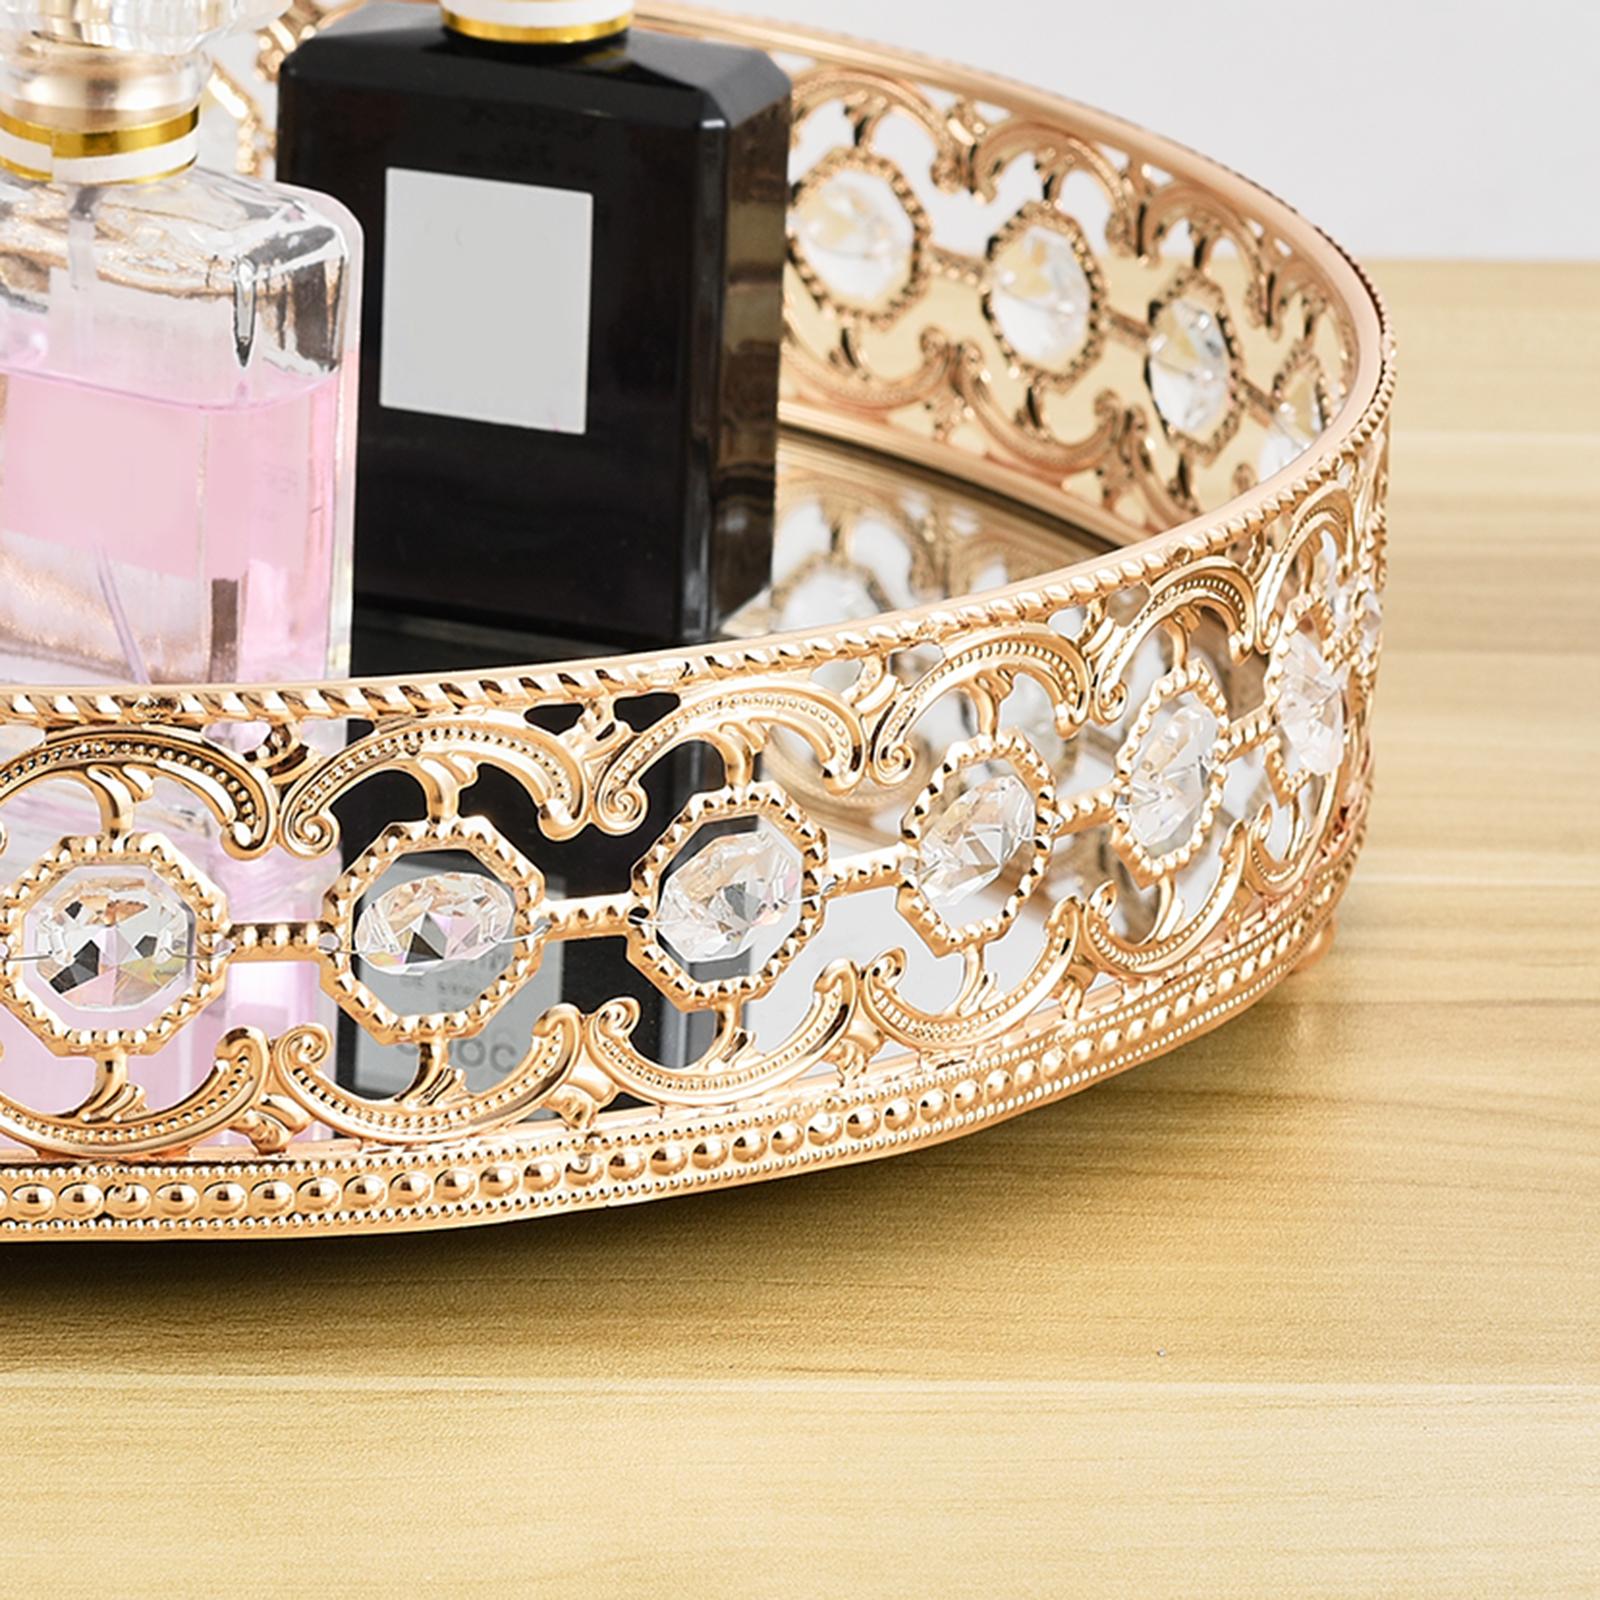 Crystal Cosmetic Makeup Tray Jewelry Trinket Organizer Vanity Tray Mirror Decorative Tray Perfume Skin Care Storage Home Dresser Table Decor, 10 Inch